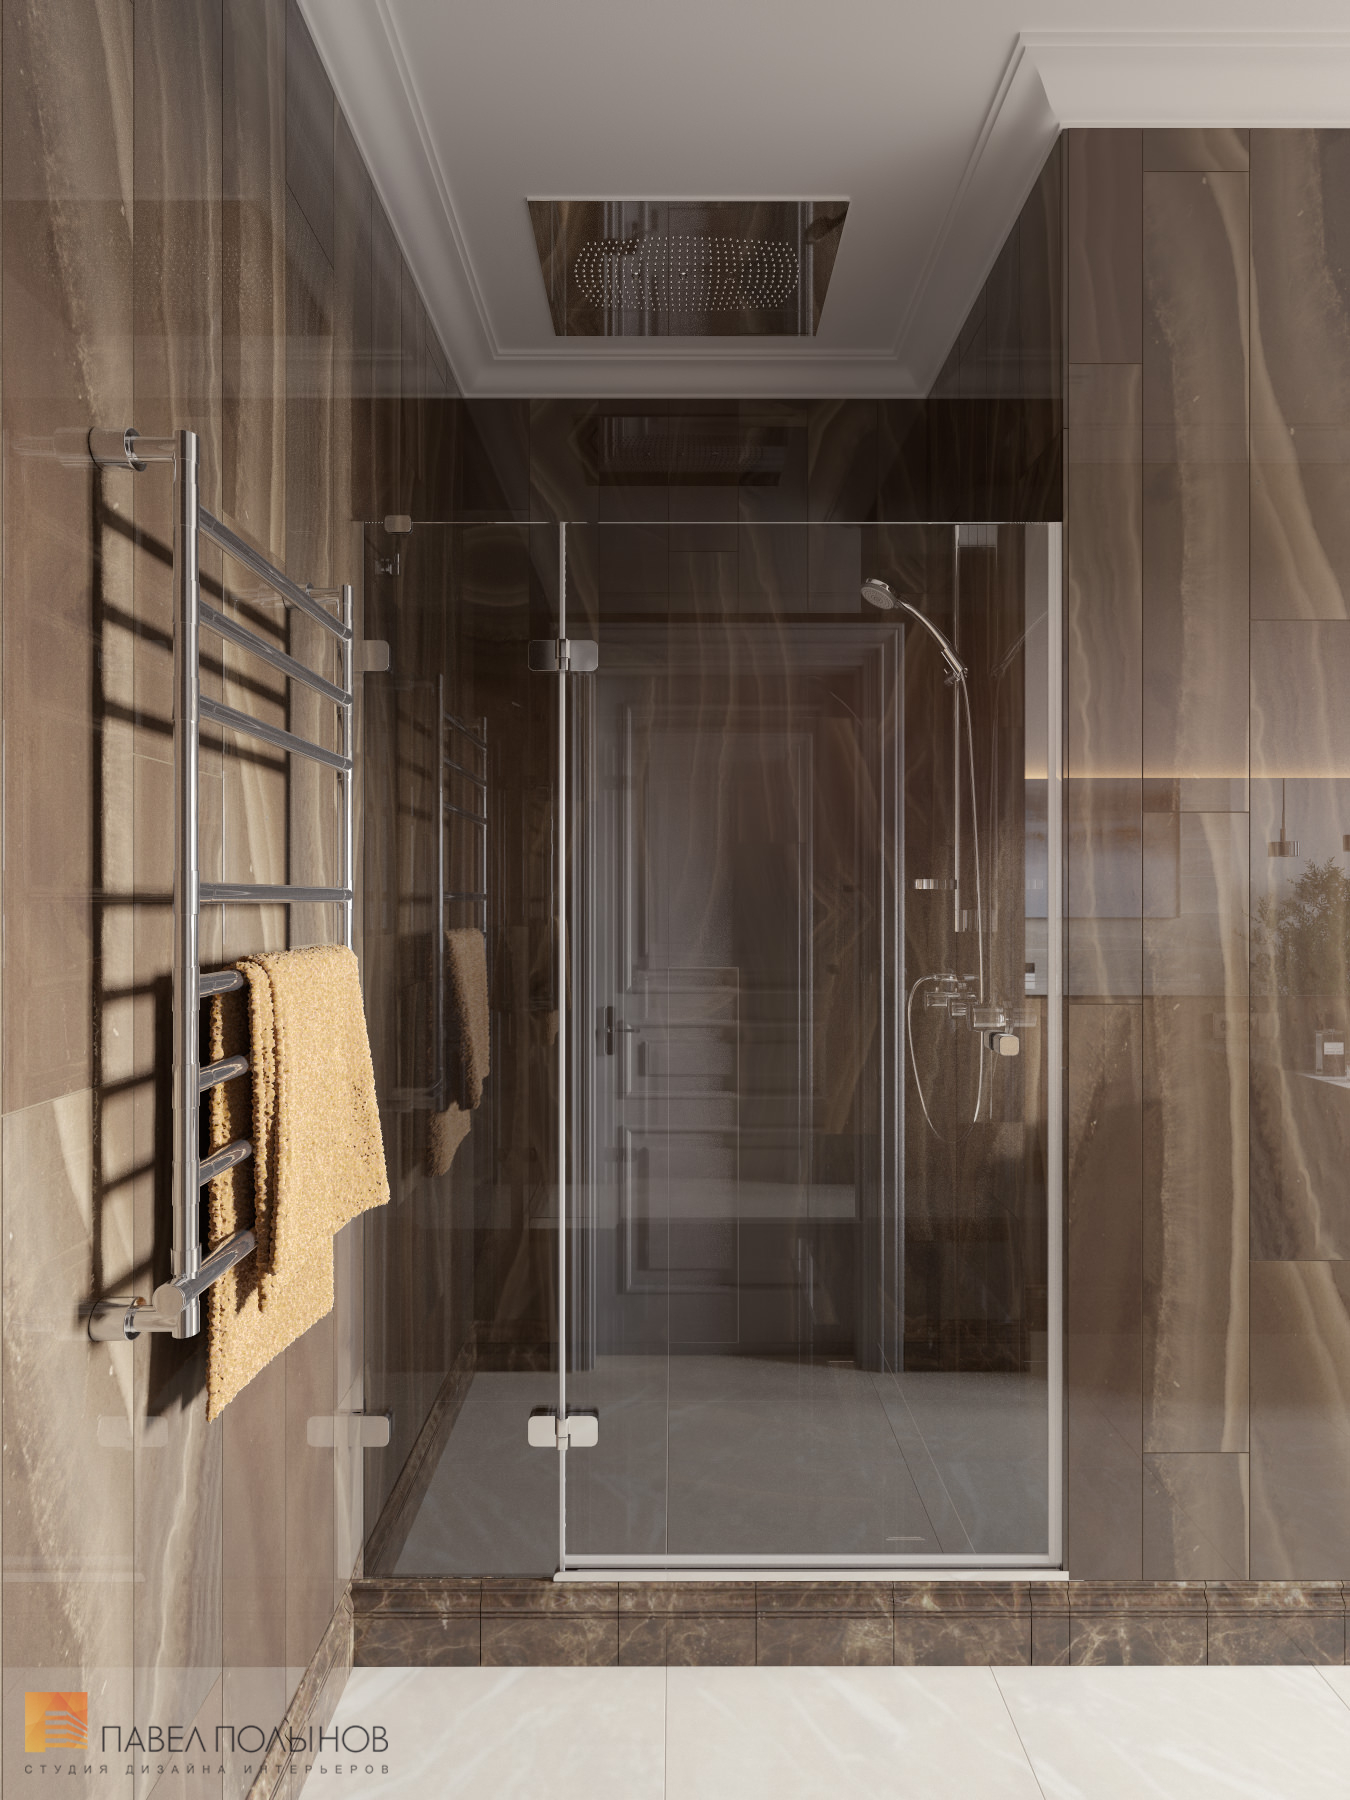 Фото душевая комната из проекта «Интерьер квартиры в стиле неоклассики, ЖК «Парадный квартал», 190 кв.м.»